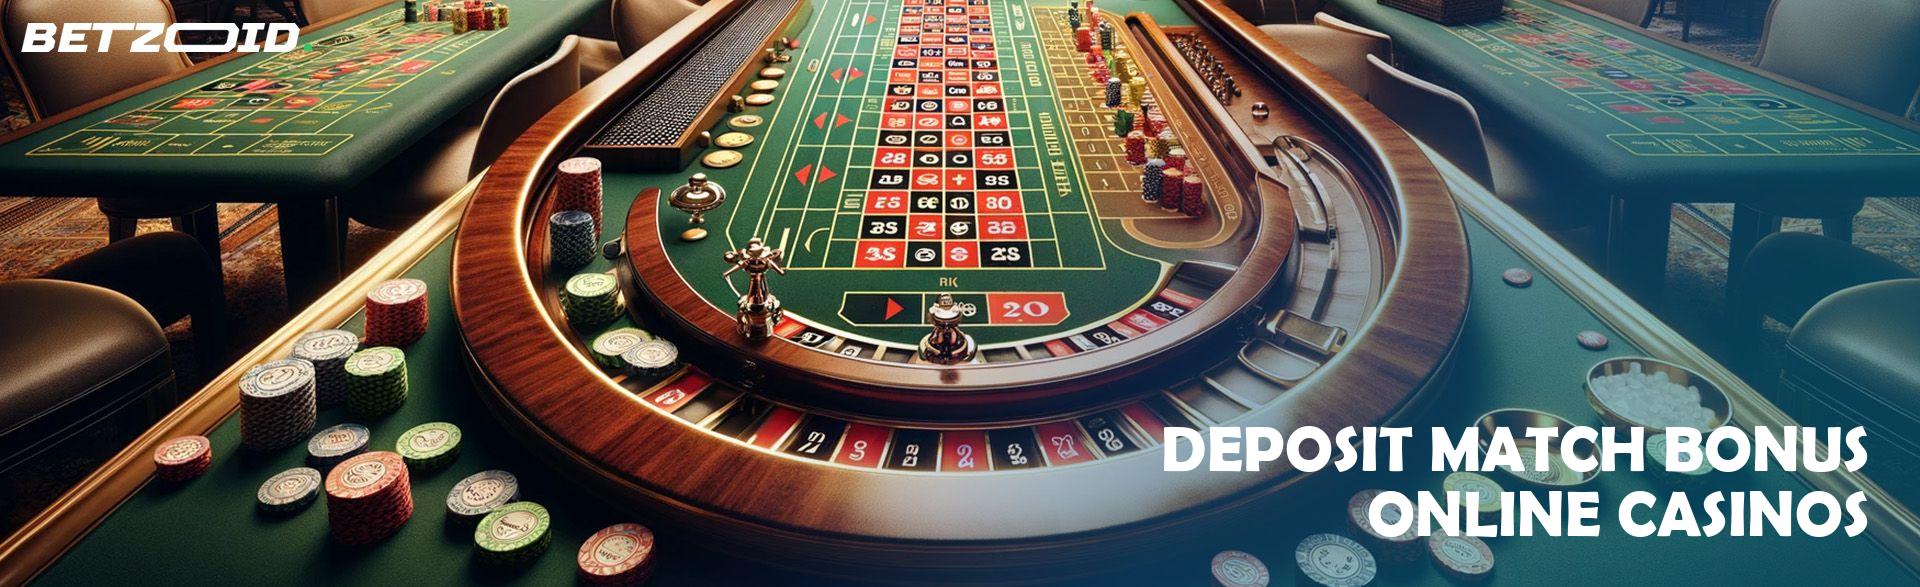 Deposit Match Bonus Online Casinos.